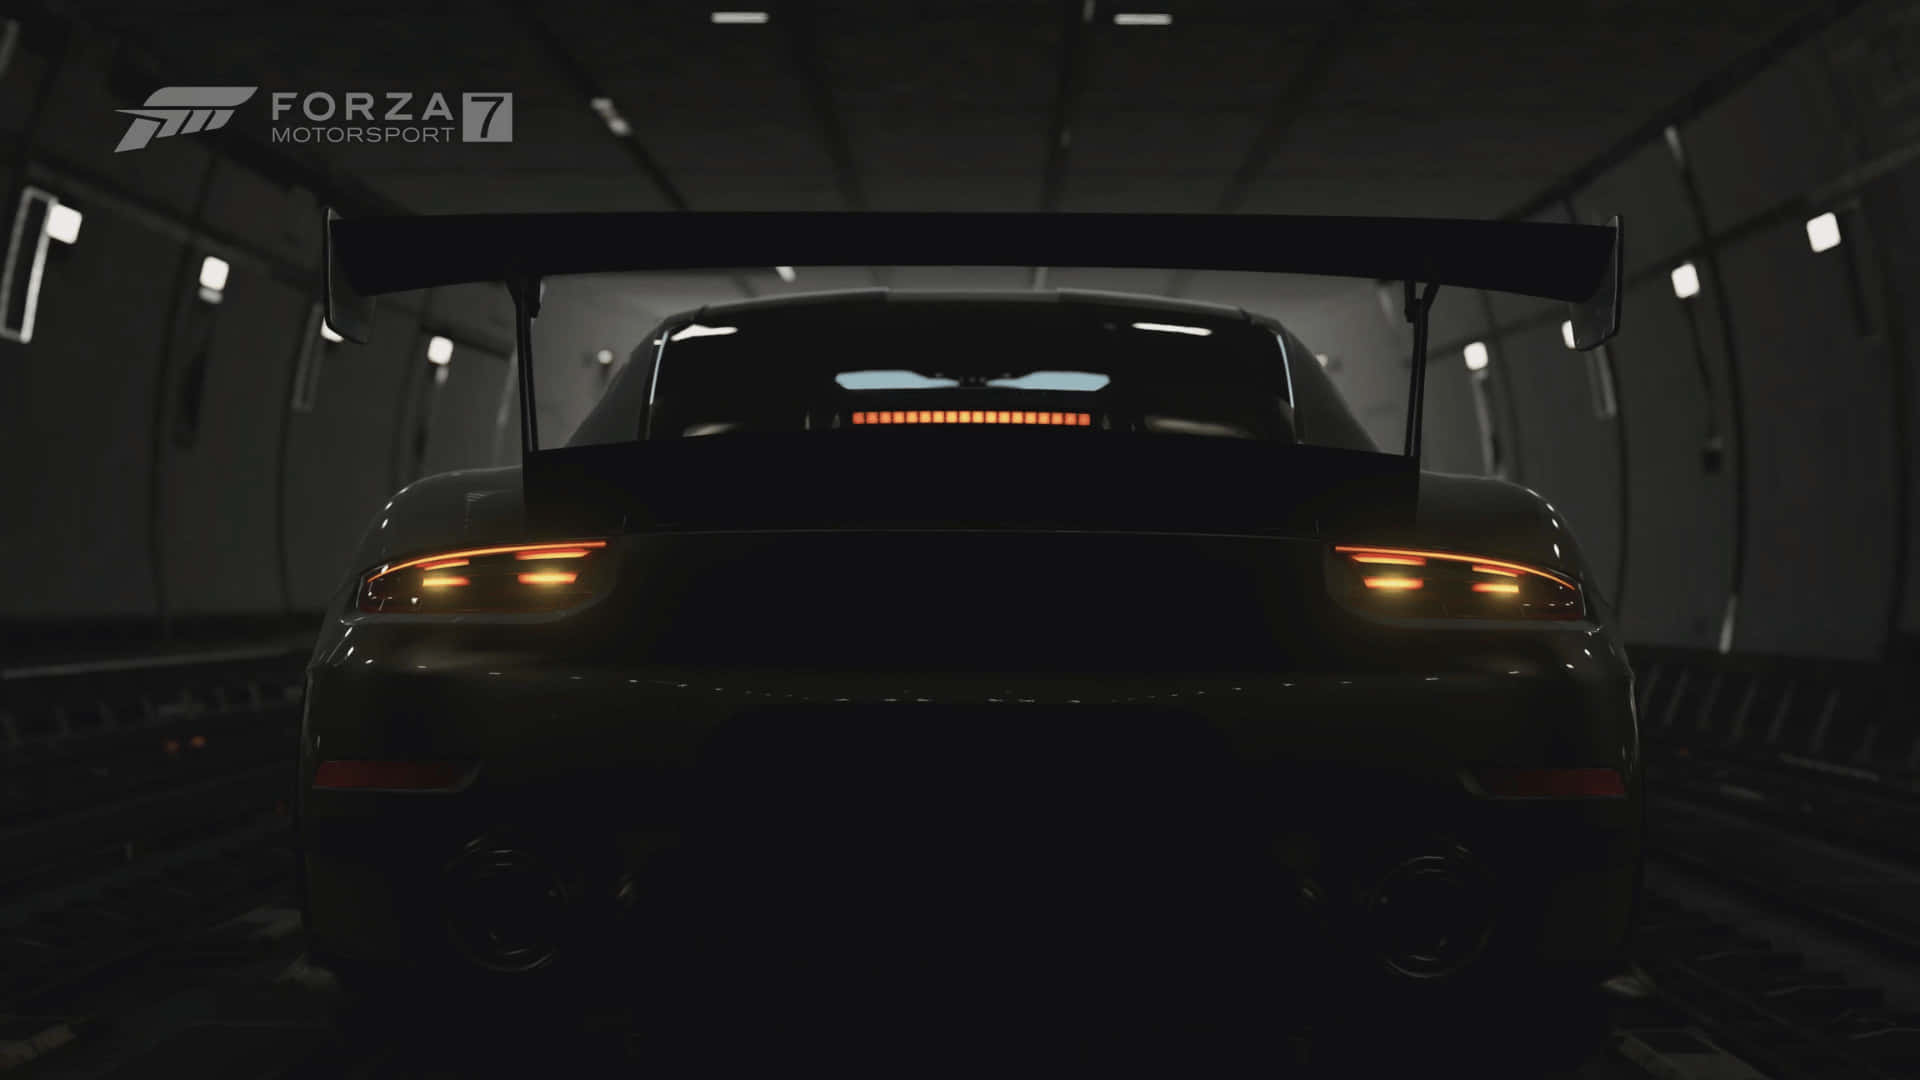 Preparatia Correre In Forza Motorsport 7